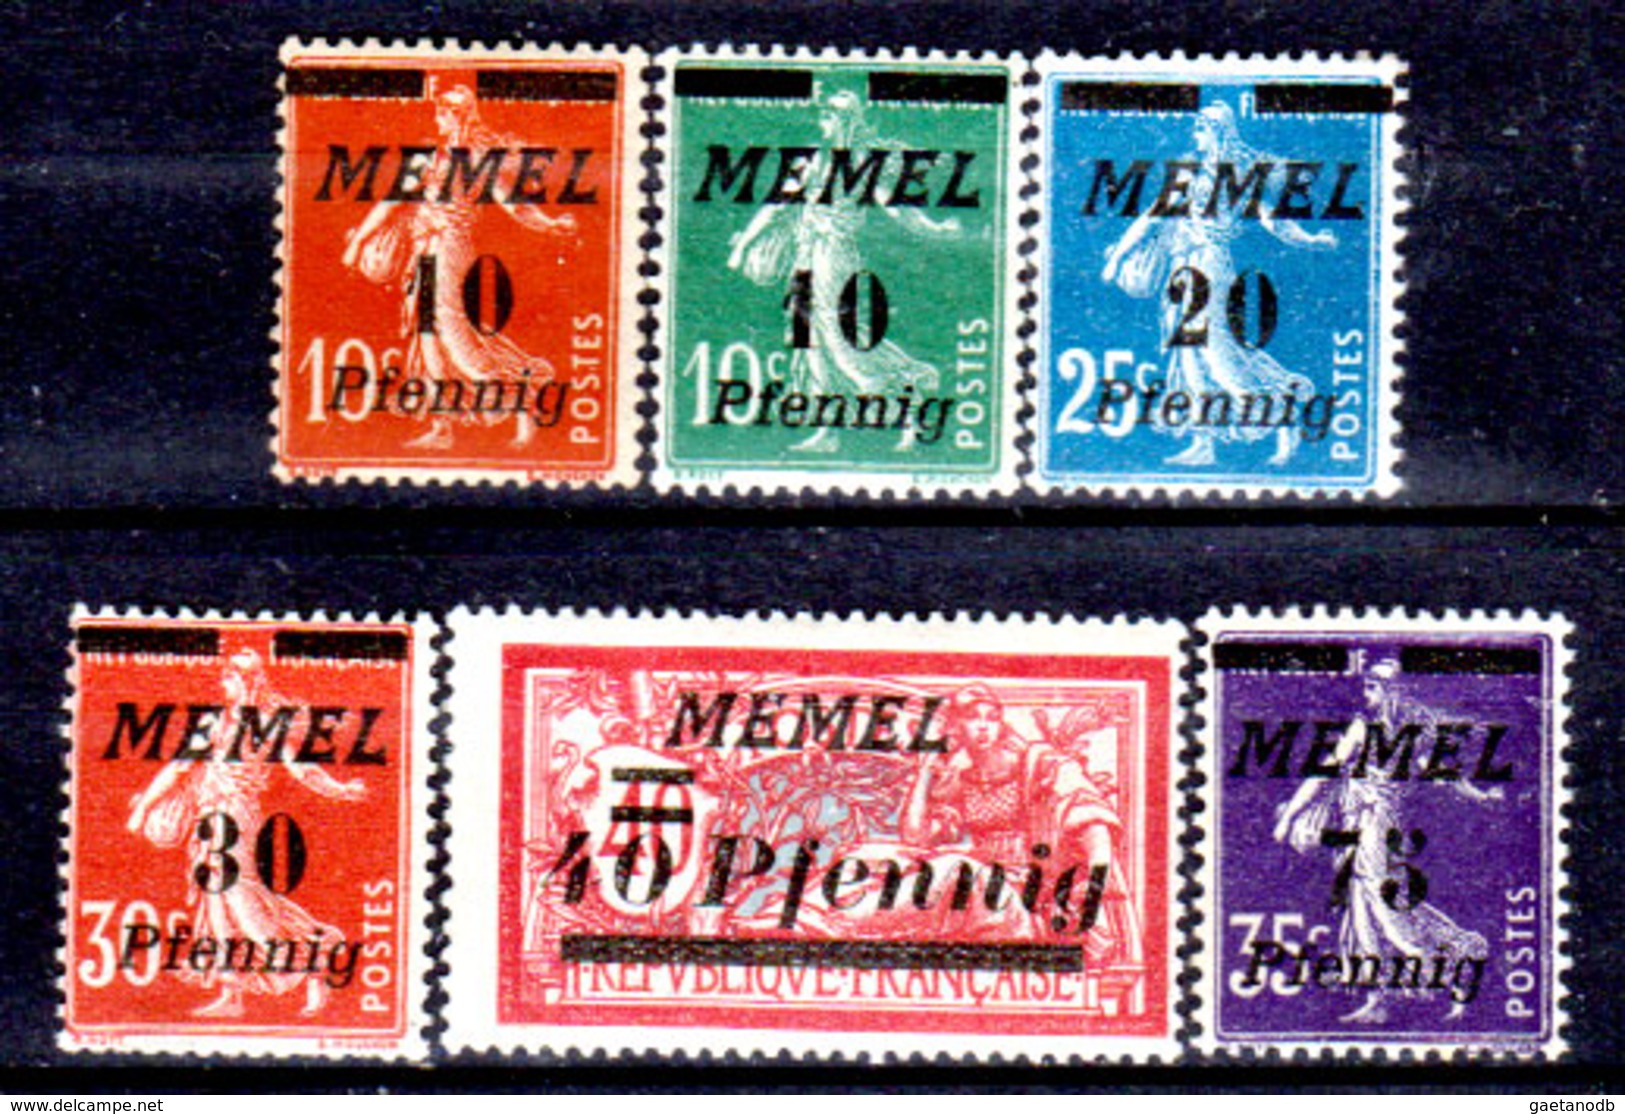 Memel-009 - Emissione 1922 (+) LH - Senza Difetti Occulti. - Unused Stamps